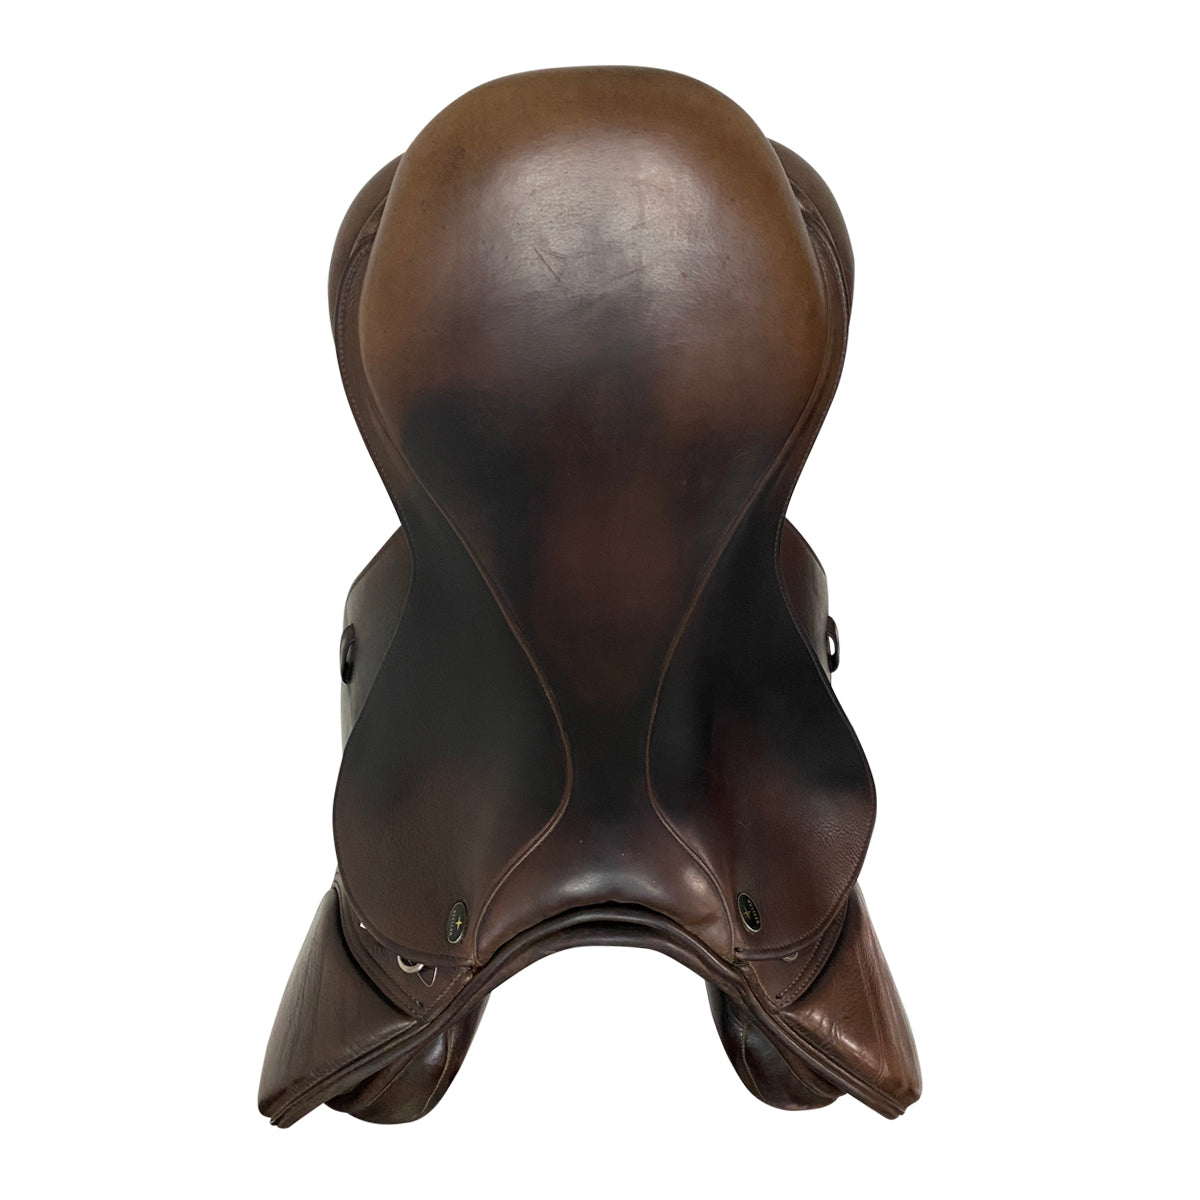 Smith Worthington Stellar Apex Saddle in Chocolate